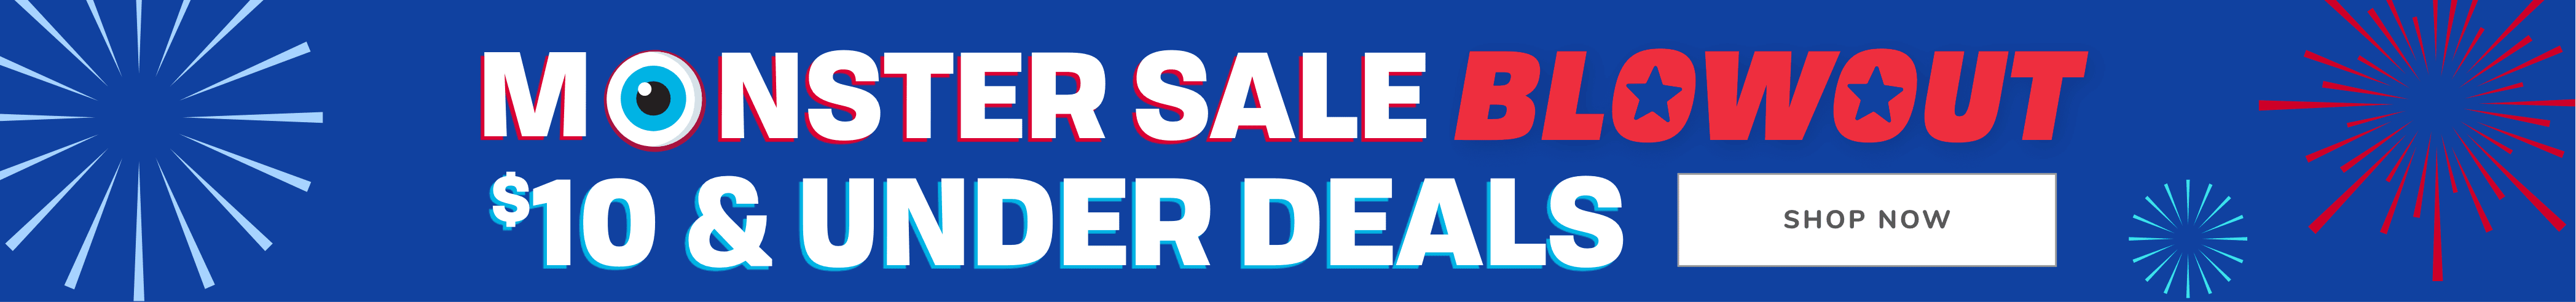 Monster Sale $10 deals